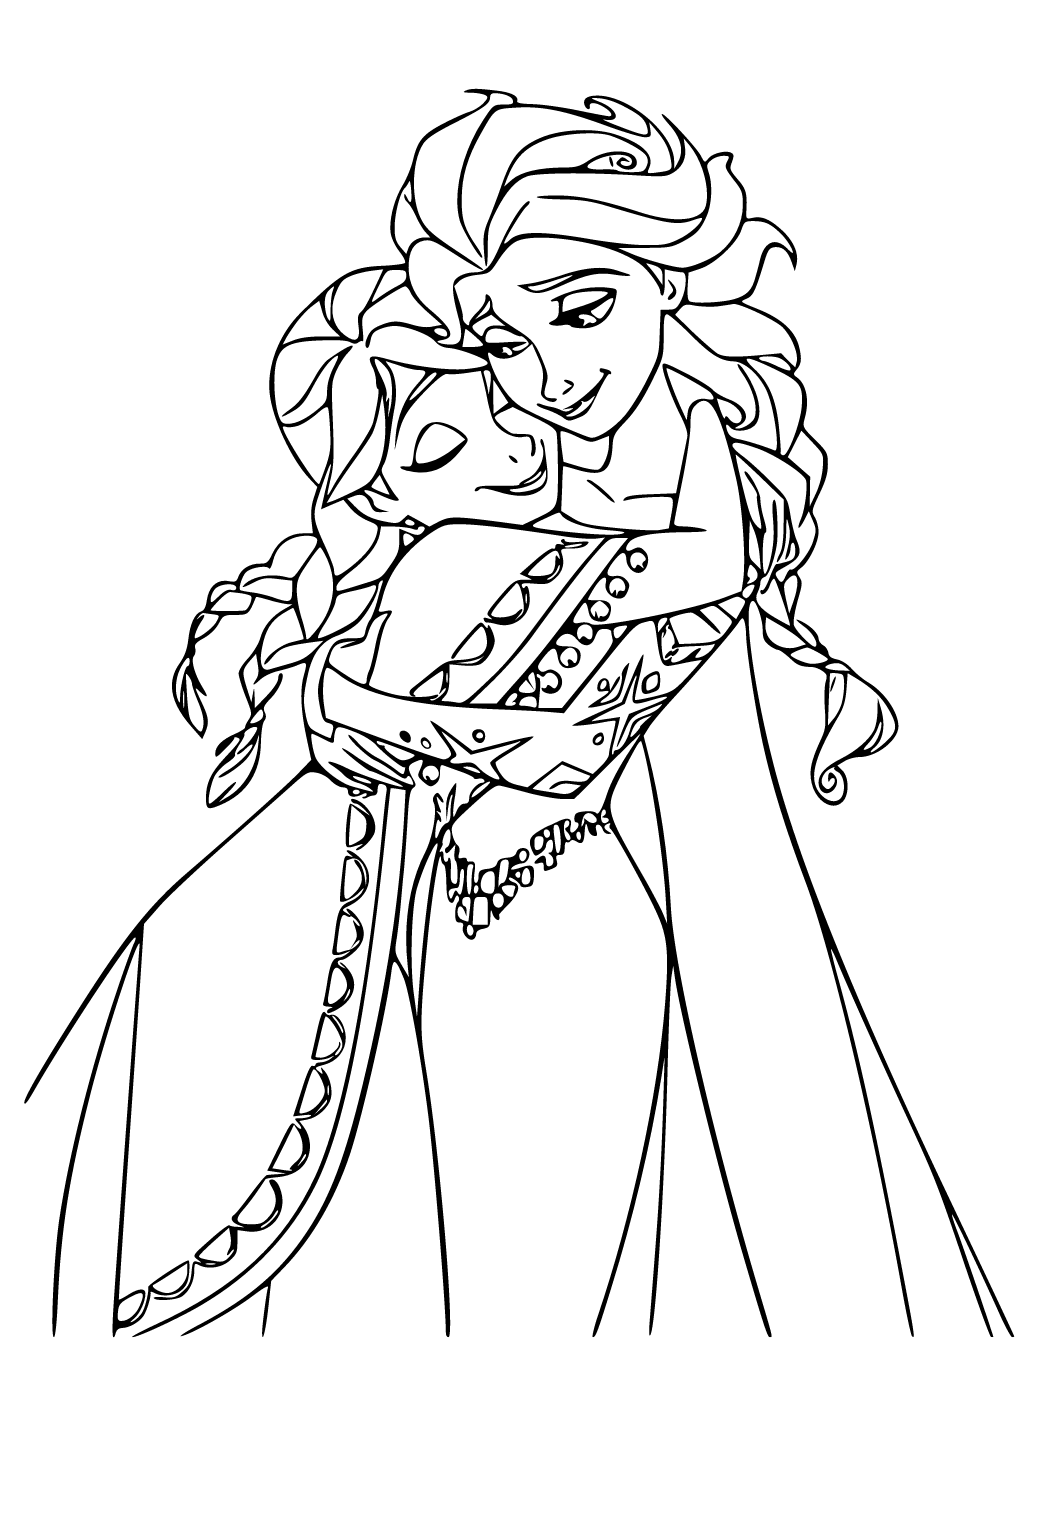 Elsa e Ana